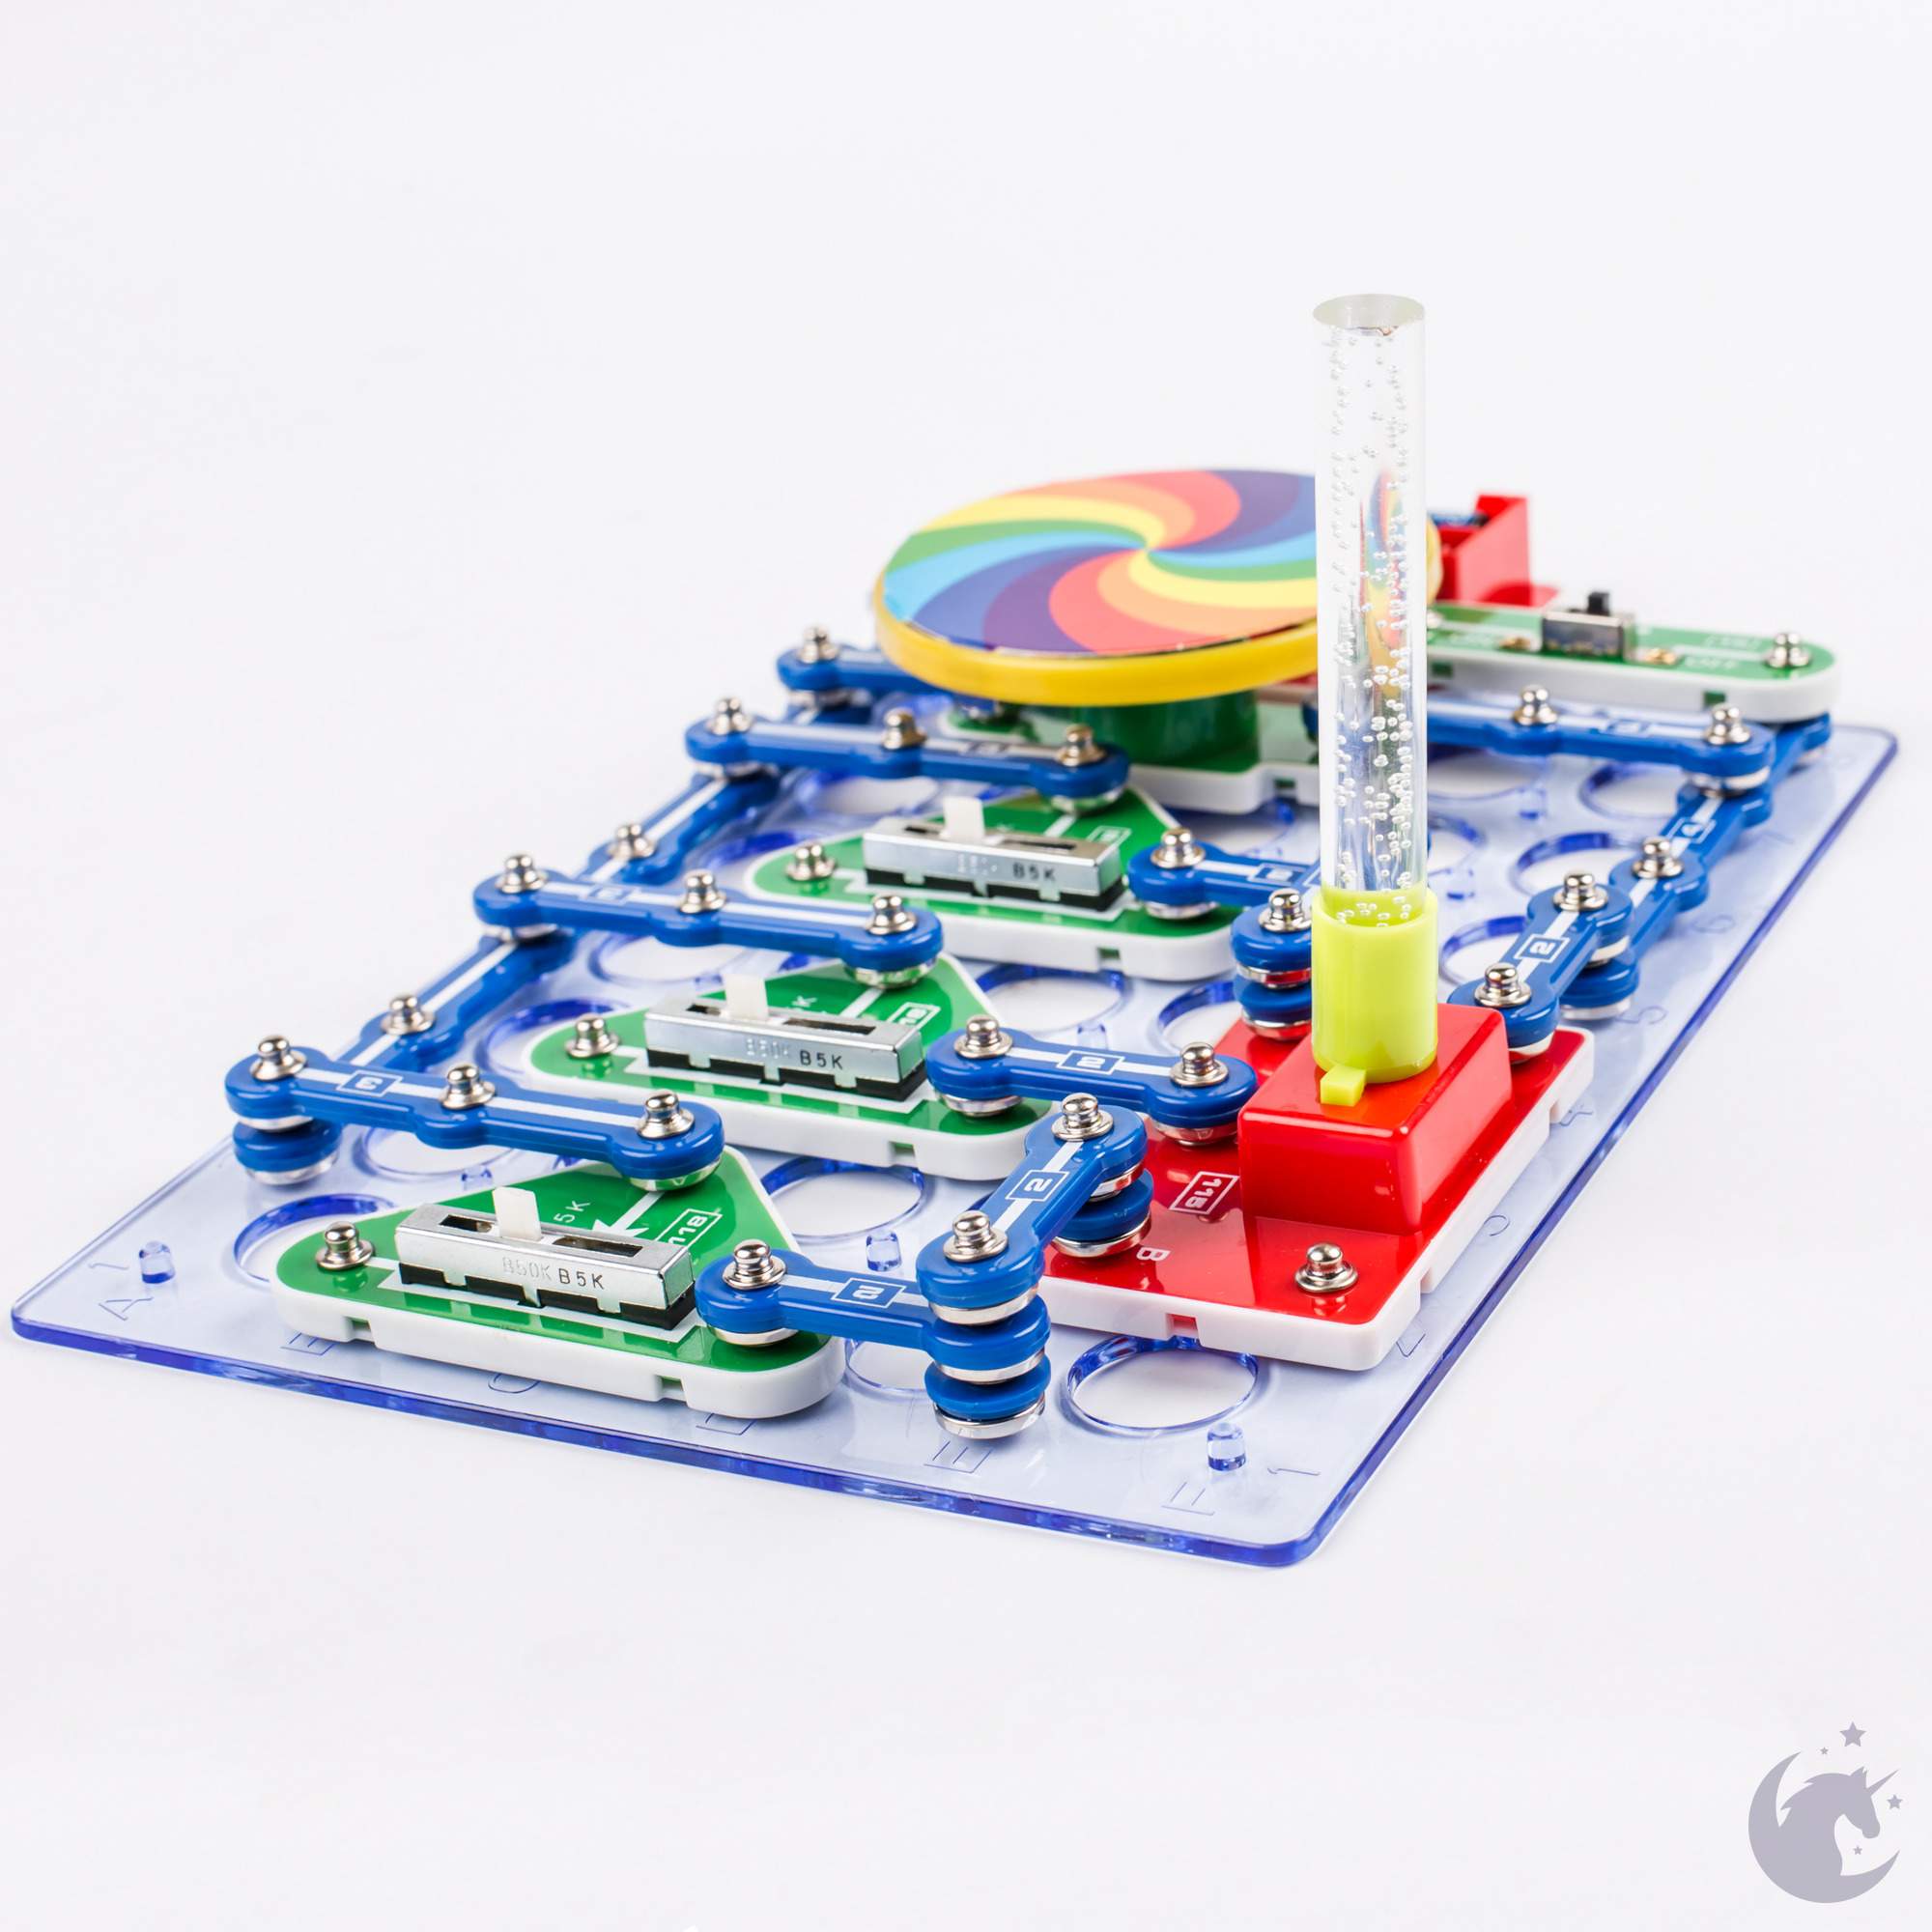 unicorntoys znatok snap circuits educational electronics kit birthday gift for kids